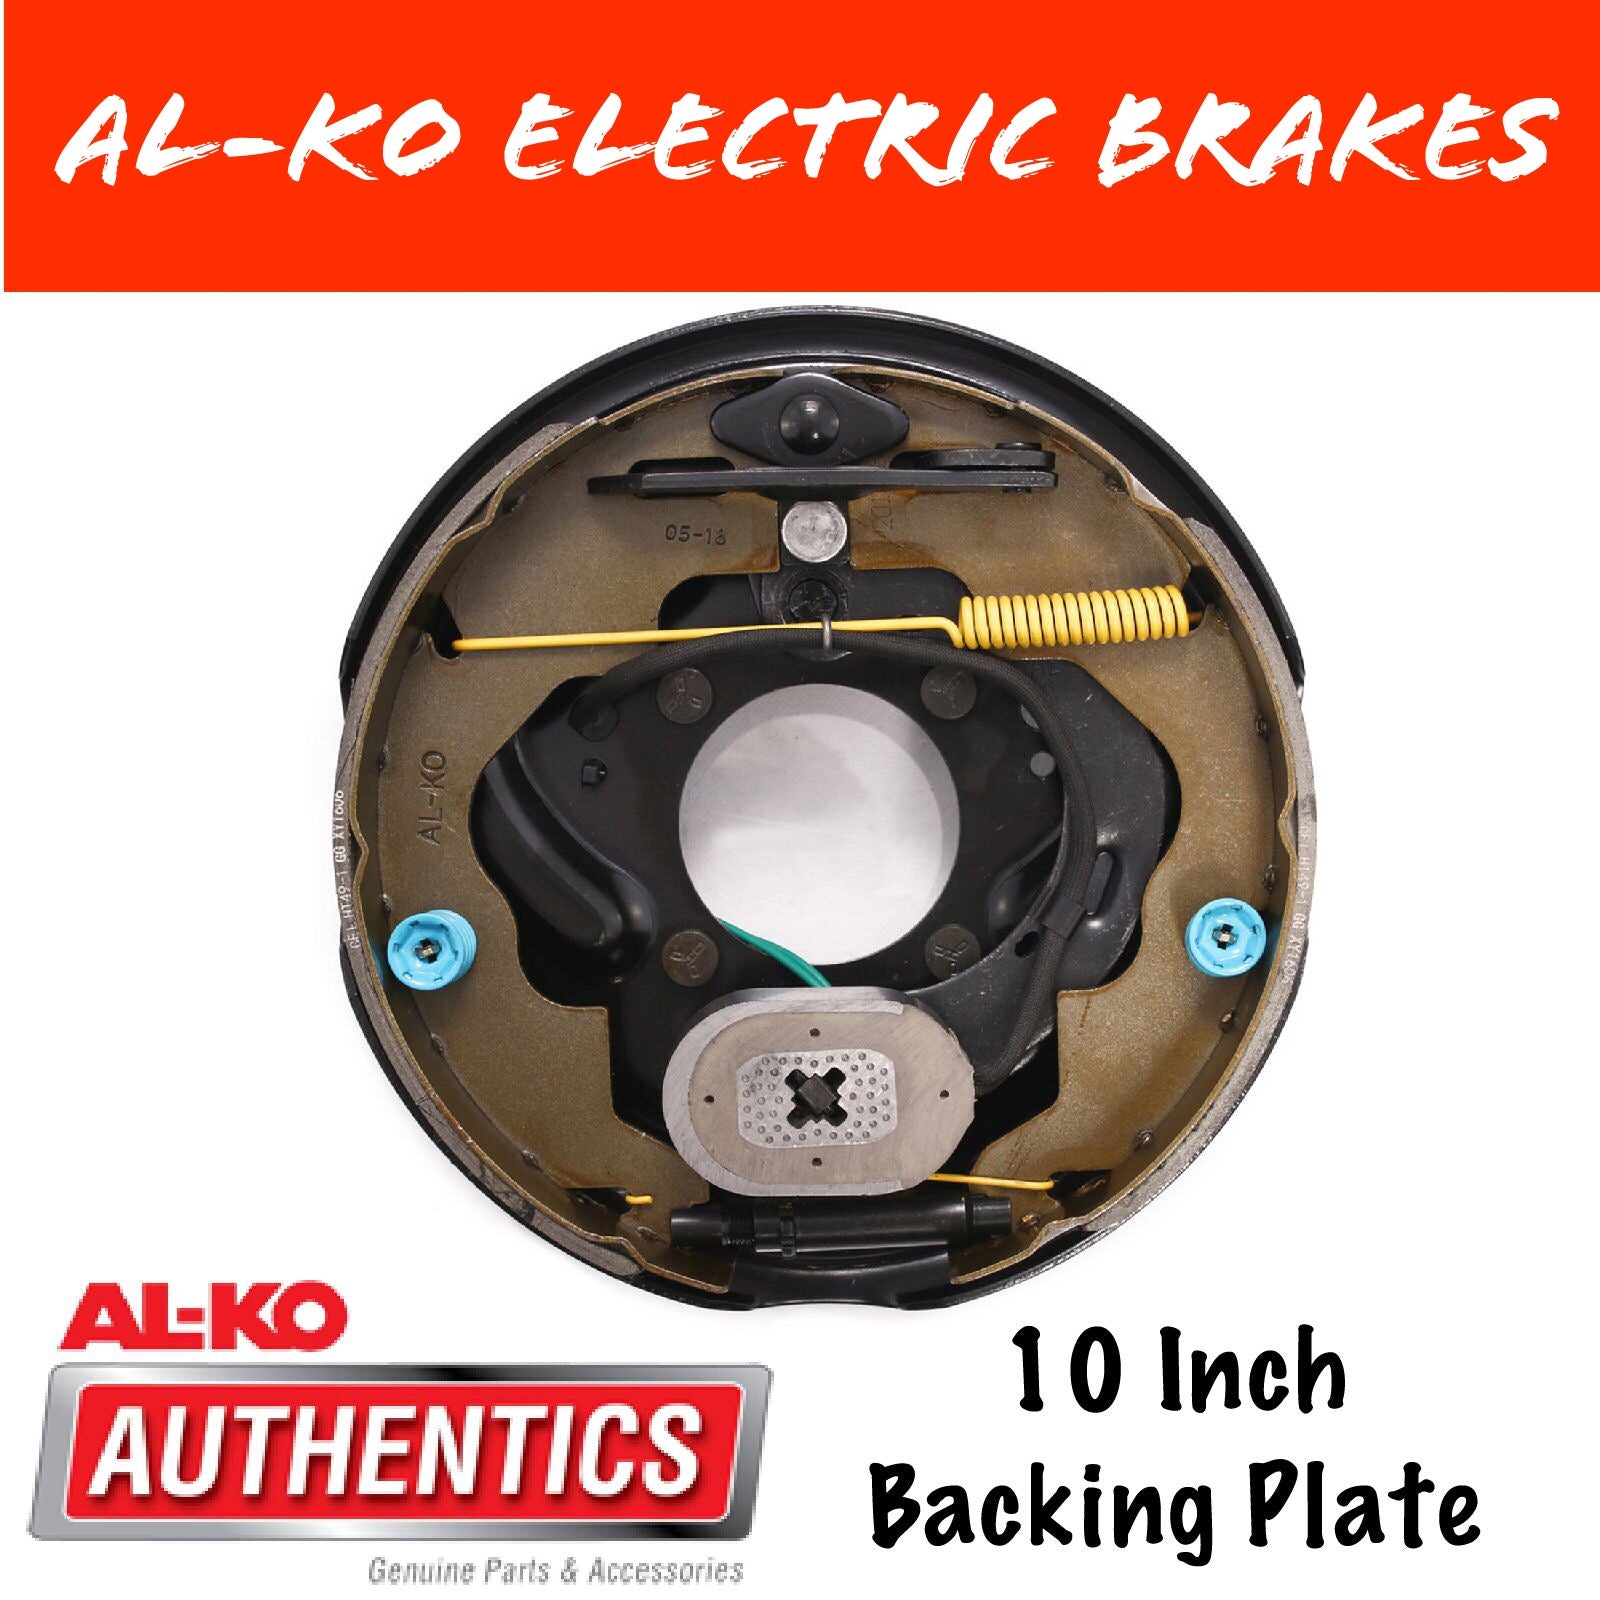 AL-KO 10 Inch Electric Brake Backing Plate